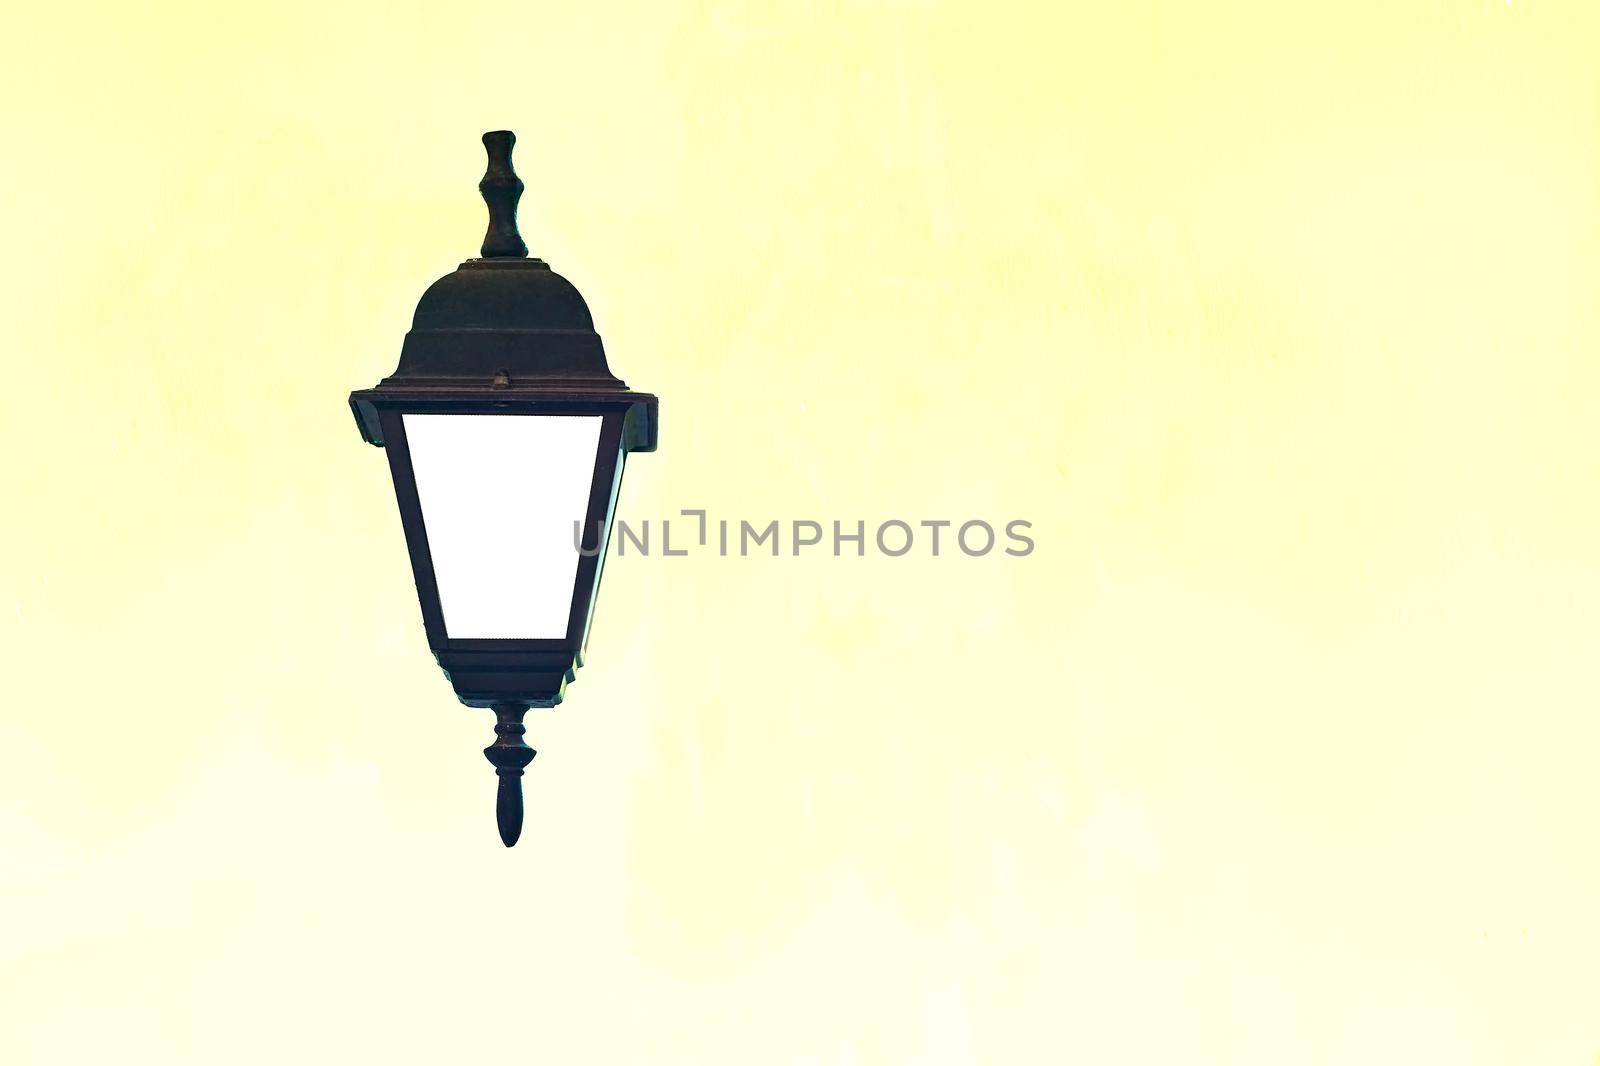 Antique black lantern on a pale yellow background by jovani68